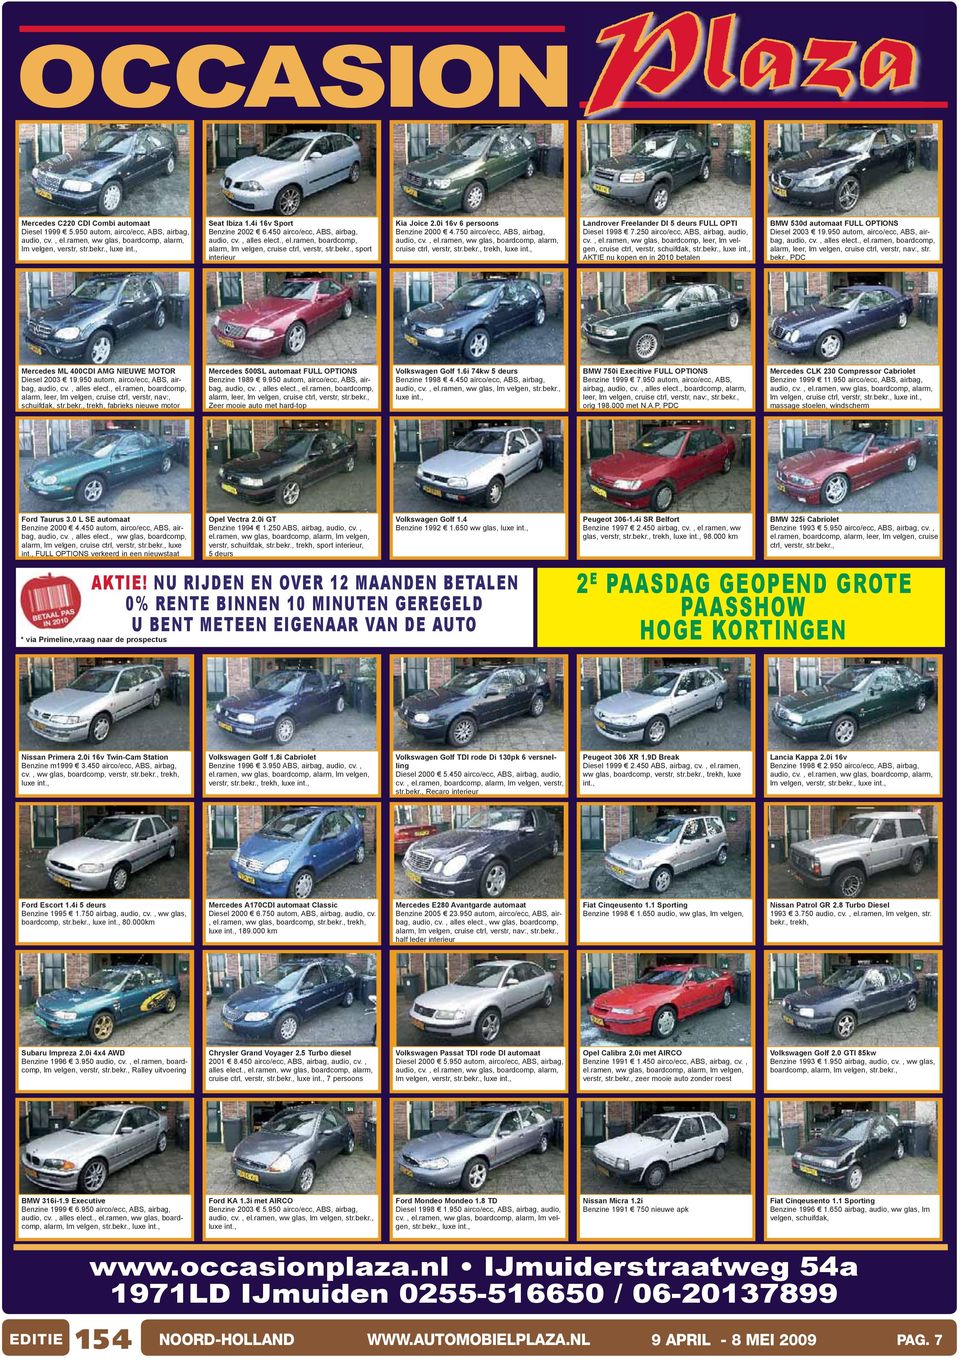 bekr., trekh, luxe int., Landrover Freelander DI 5 deurs FULL OPTI Diesel 1998 7.250 airco/ecc, ABS, airbag, audio, cv., el.